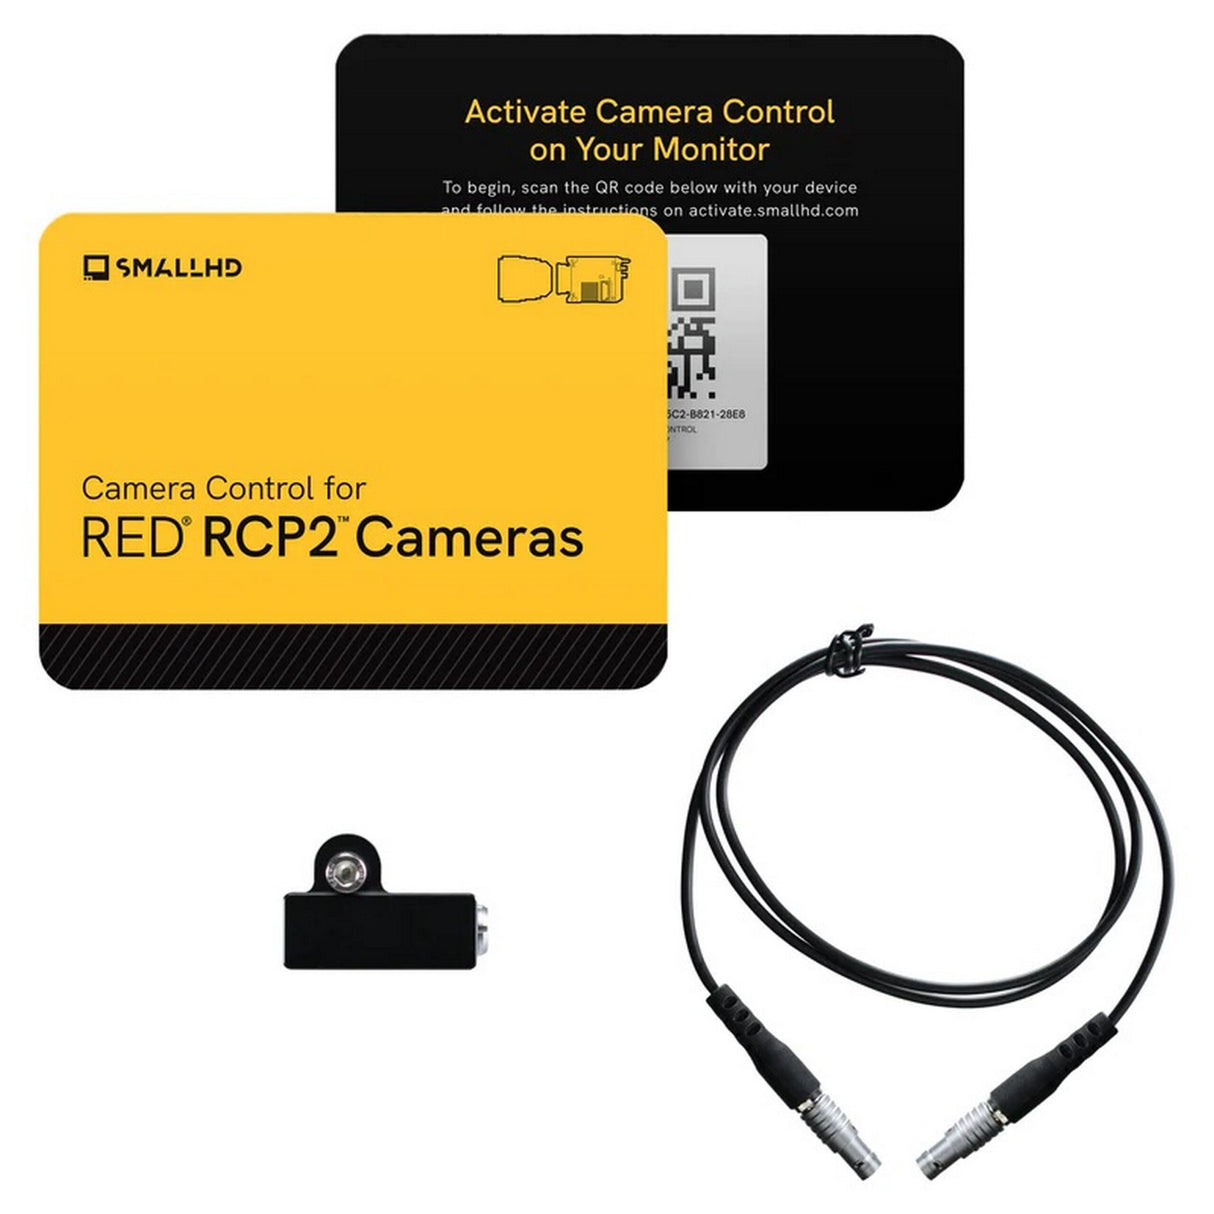 SmallHD 18-2007 Camera Control Kit for RED RCP2, KOMODO, DSMC3